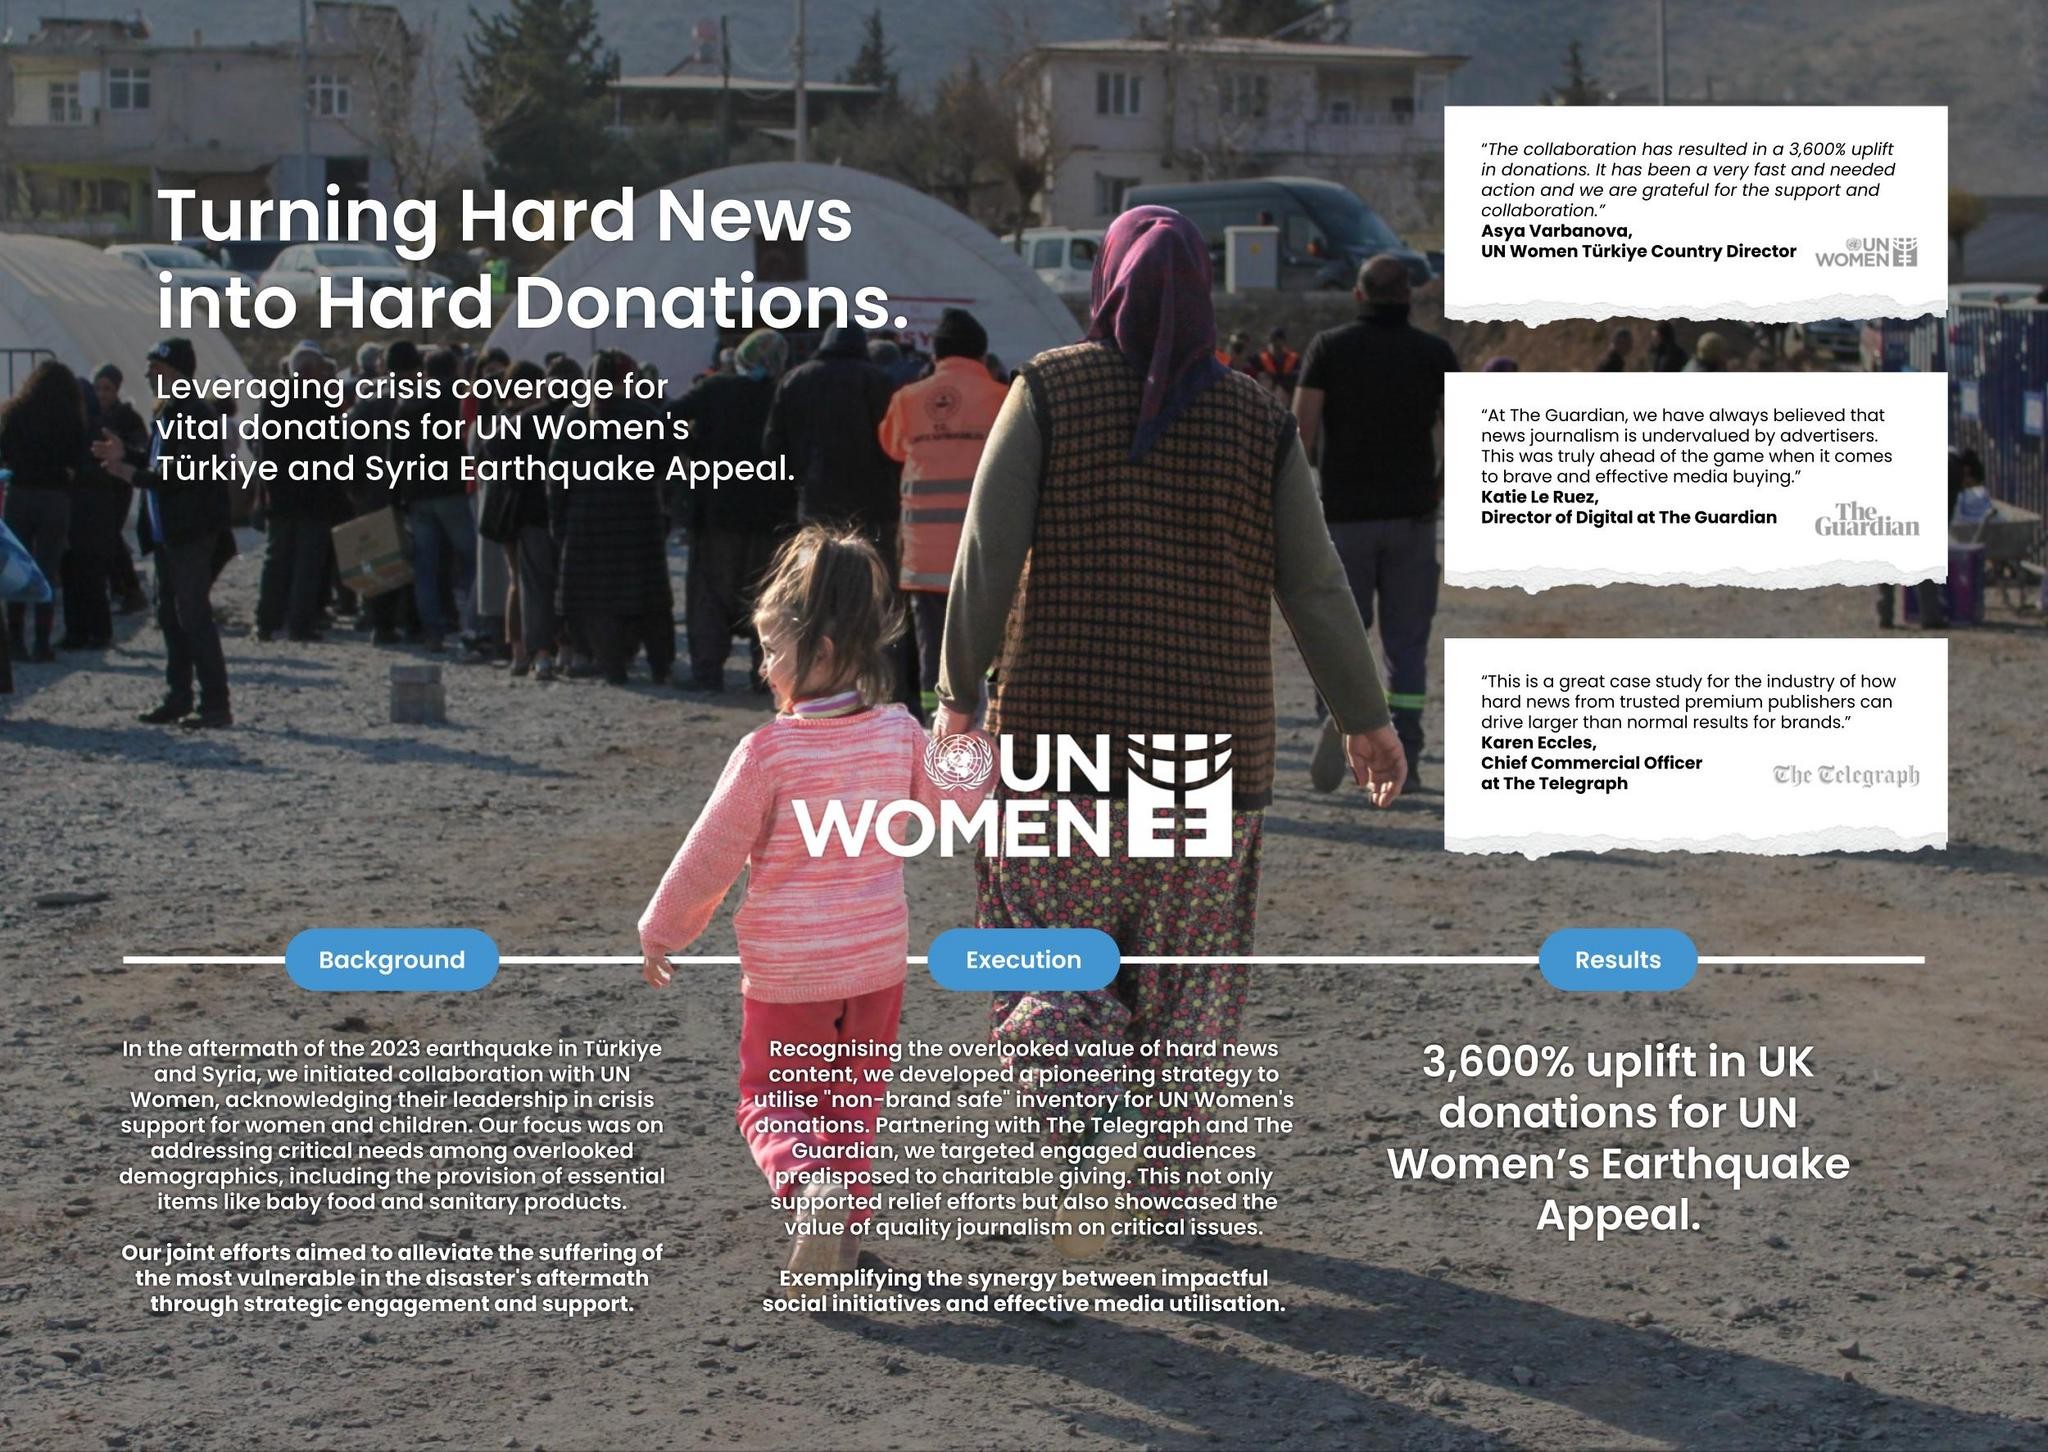 UN Women: Turning Hard News into Hard Donations